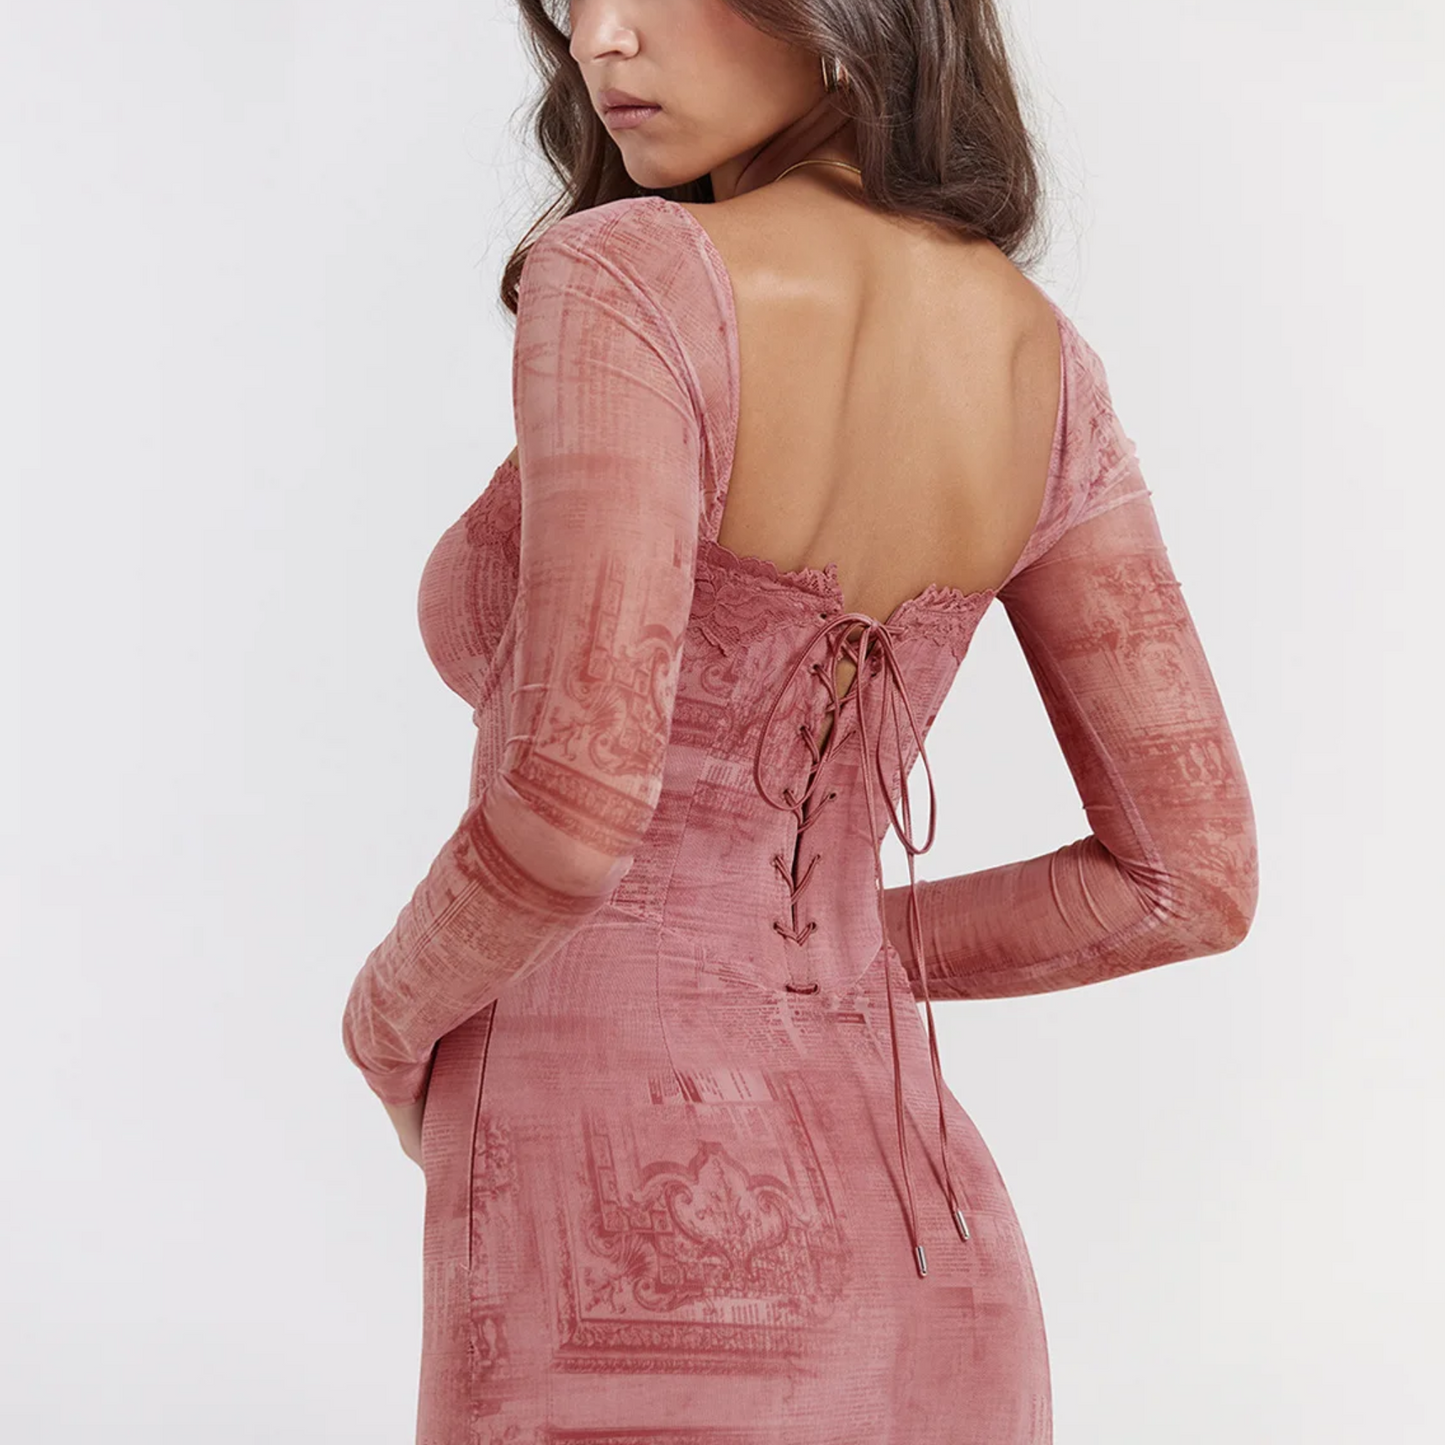 Sierra - Pink Mesh Printed Midi Bodycon Dress